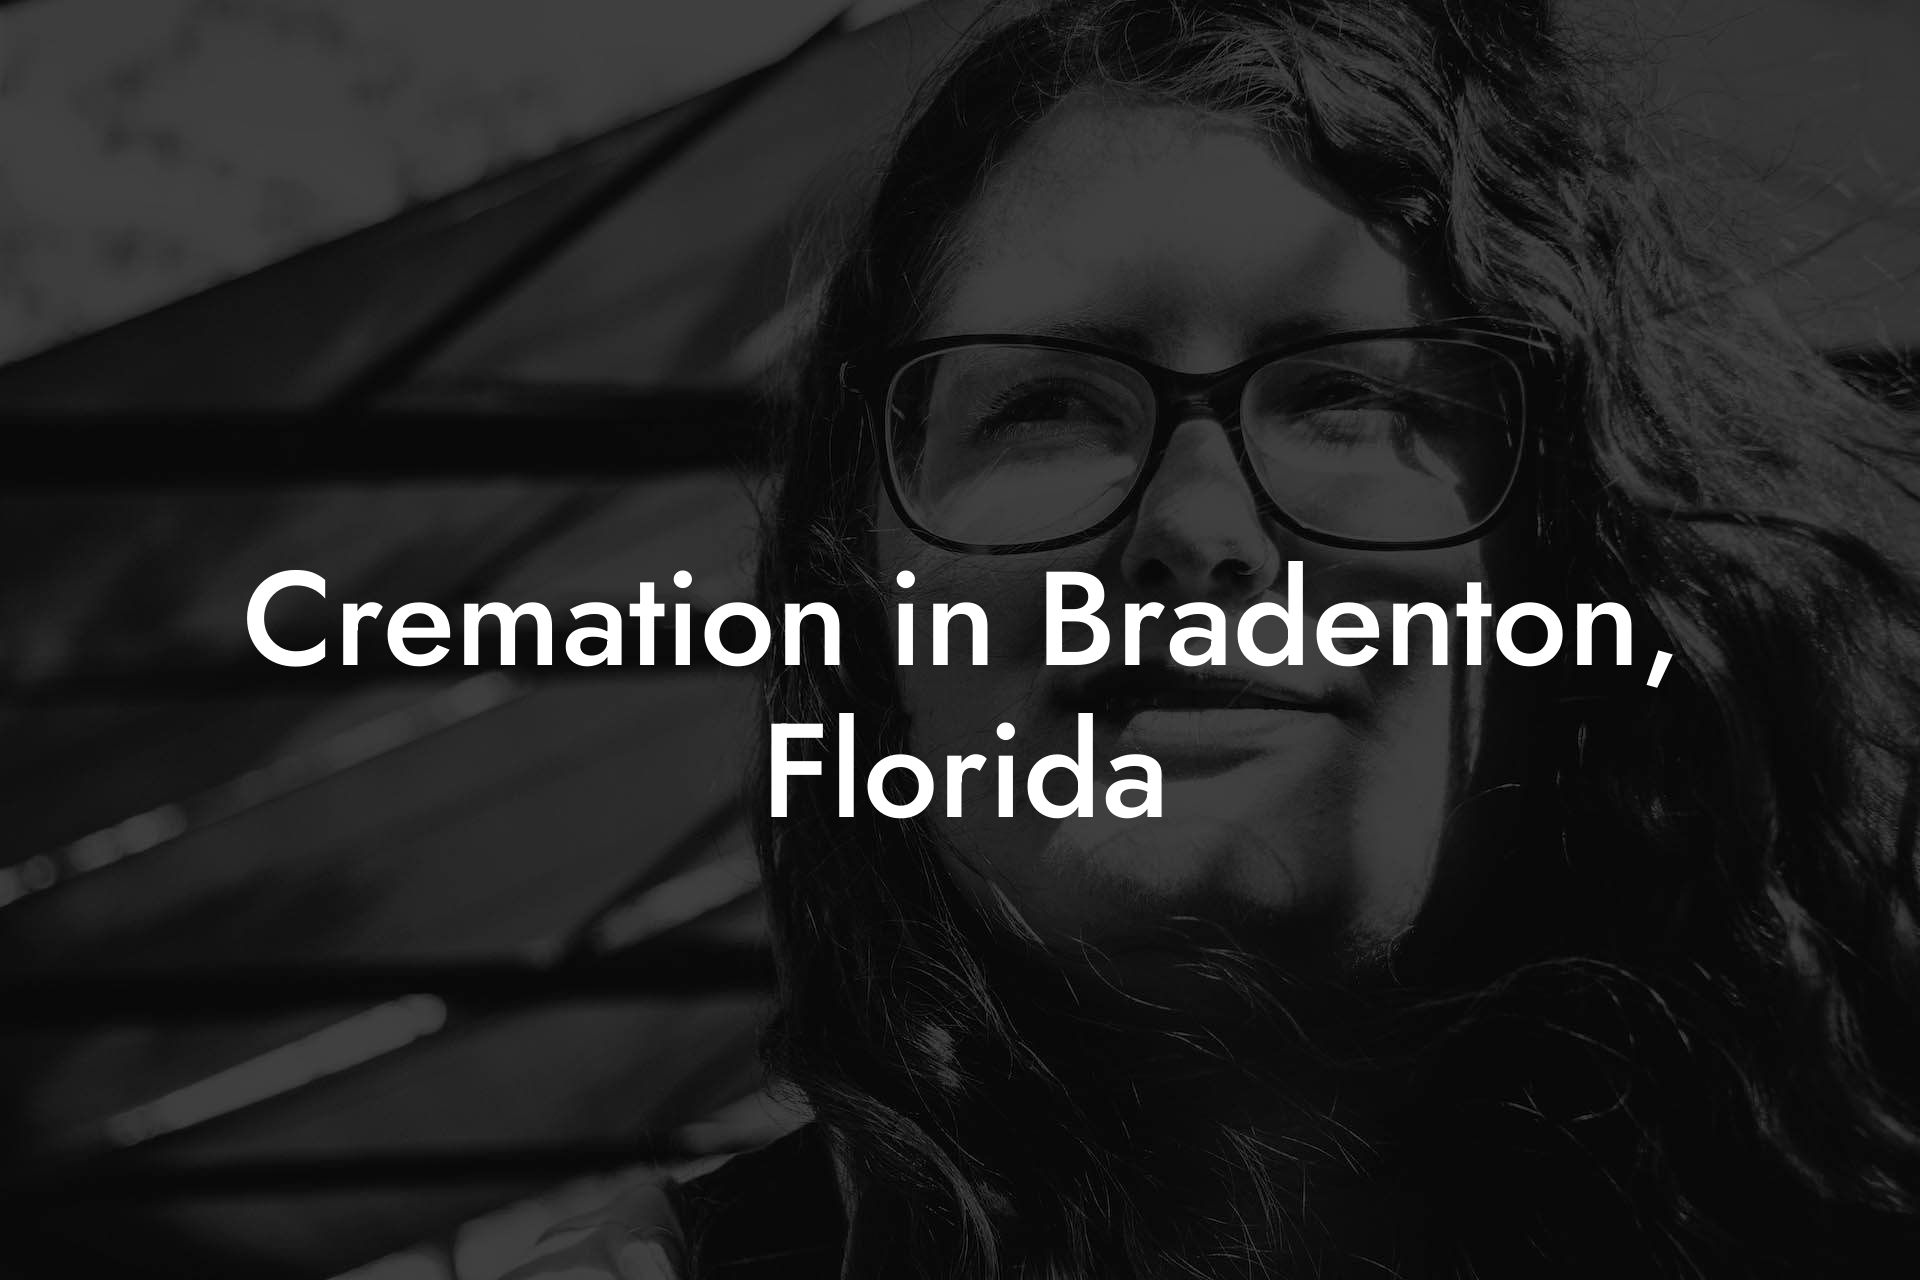 Cremation in Bradenton, Florida